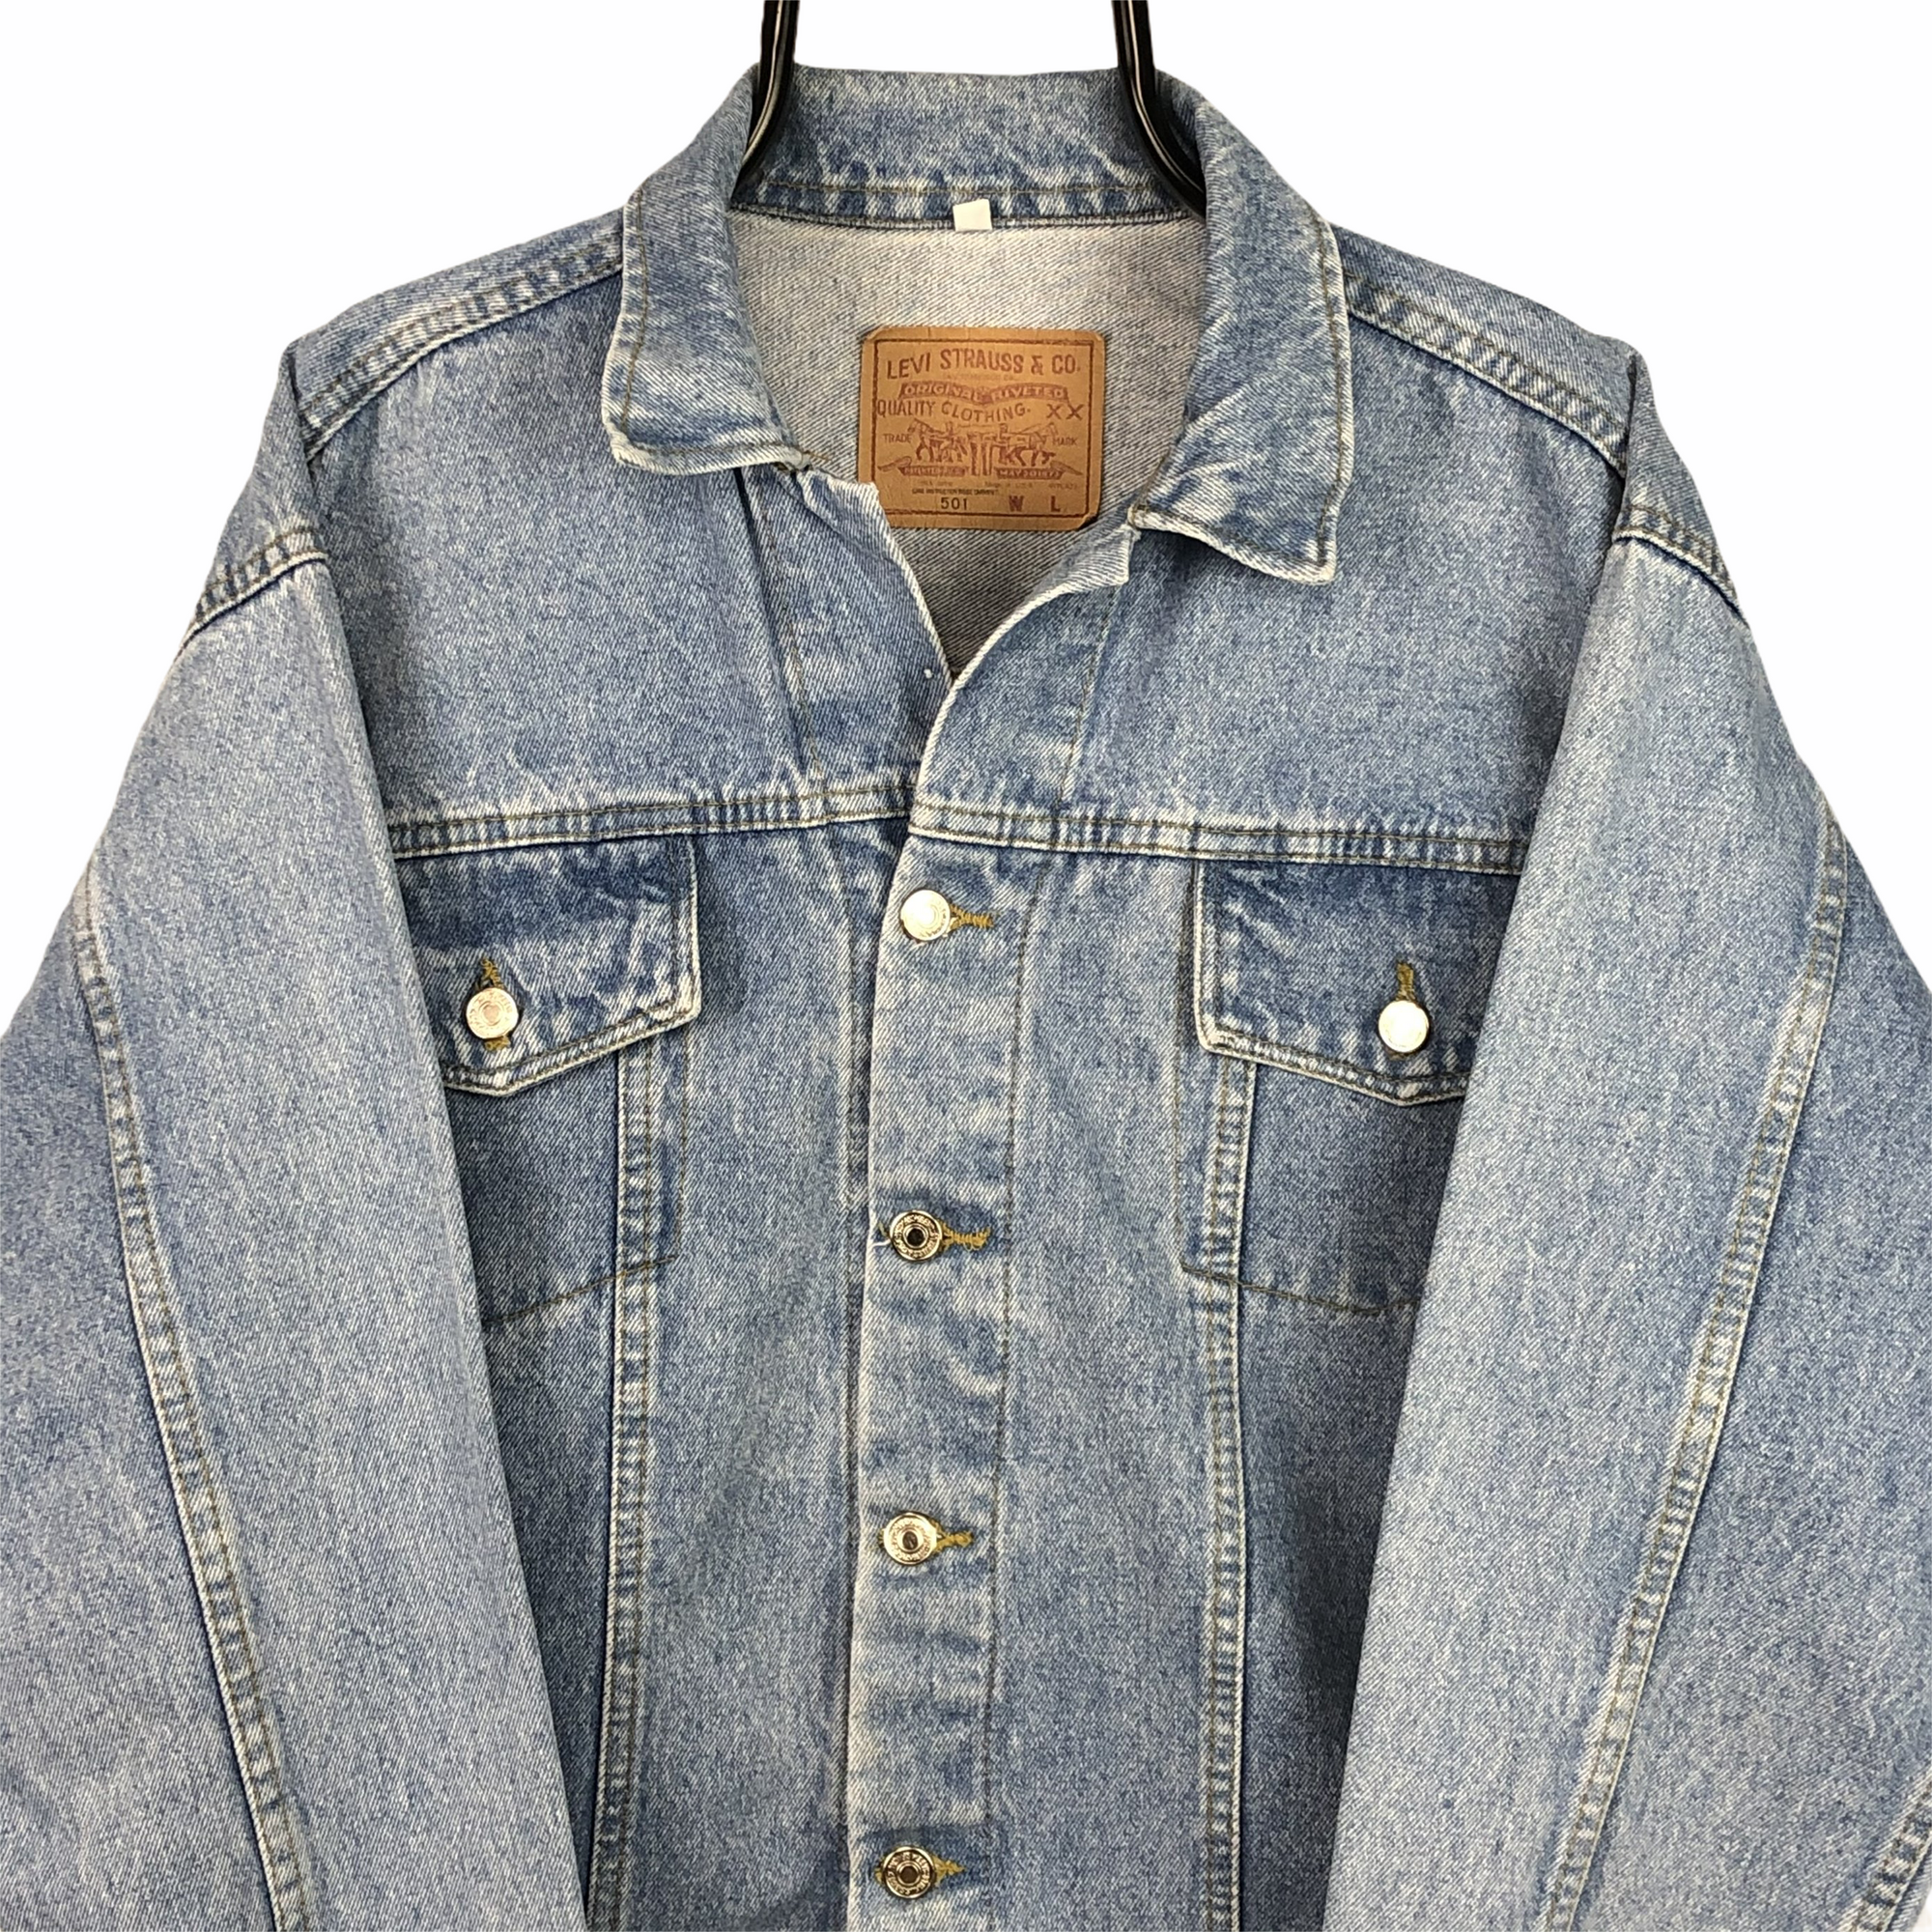 Levi's 501 Denim Jacket in Light Denim - Men's Medium/Women's Large